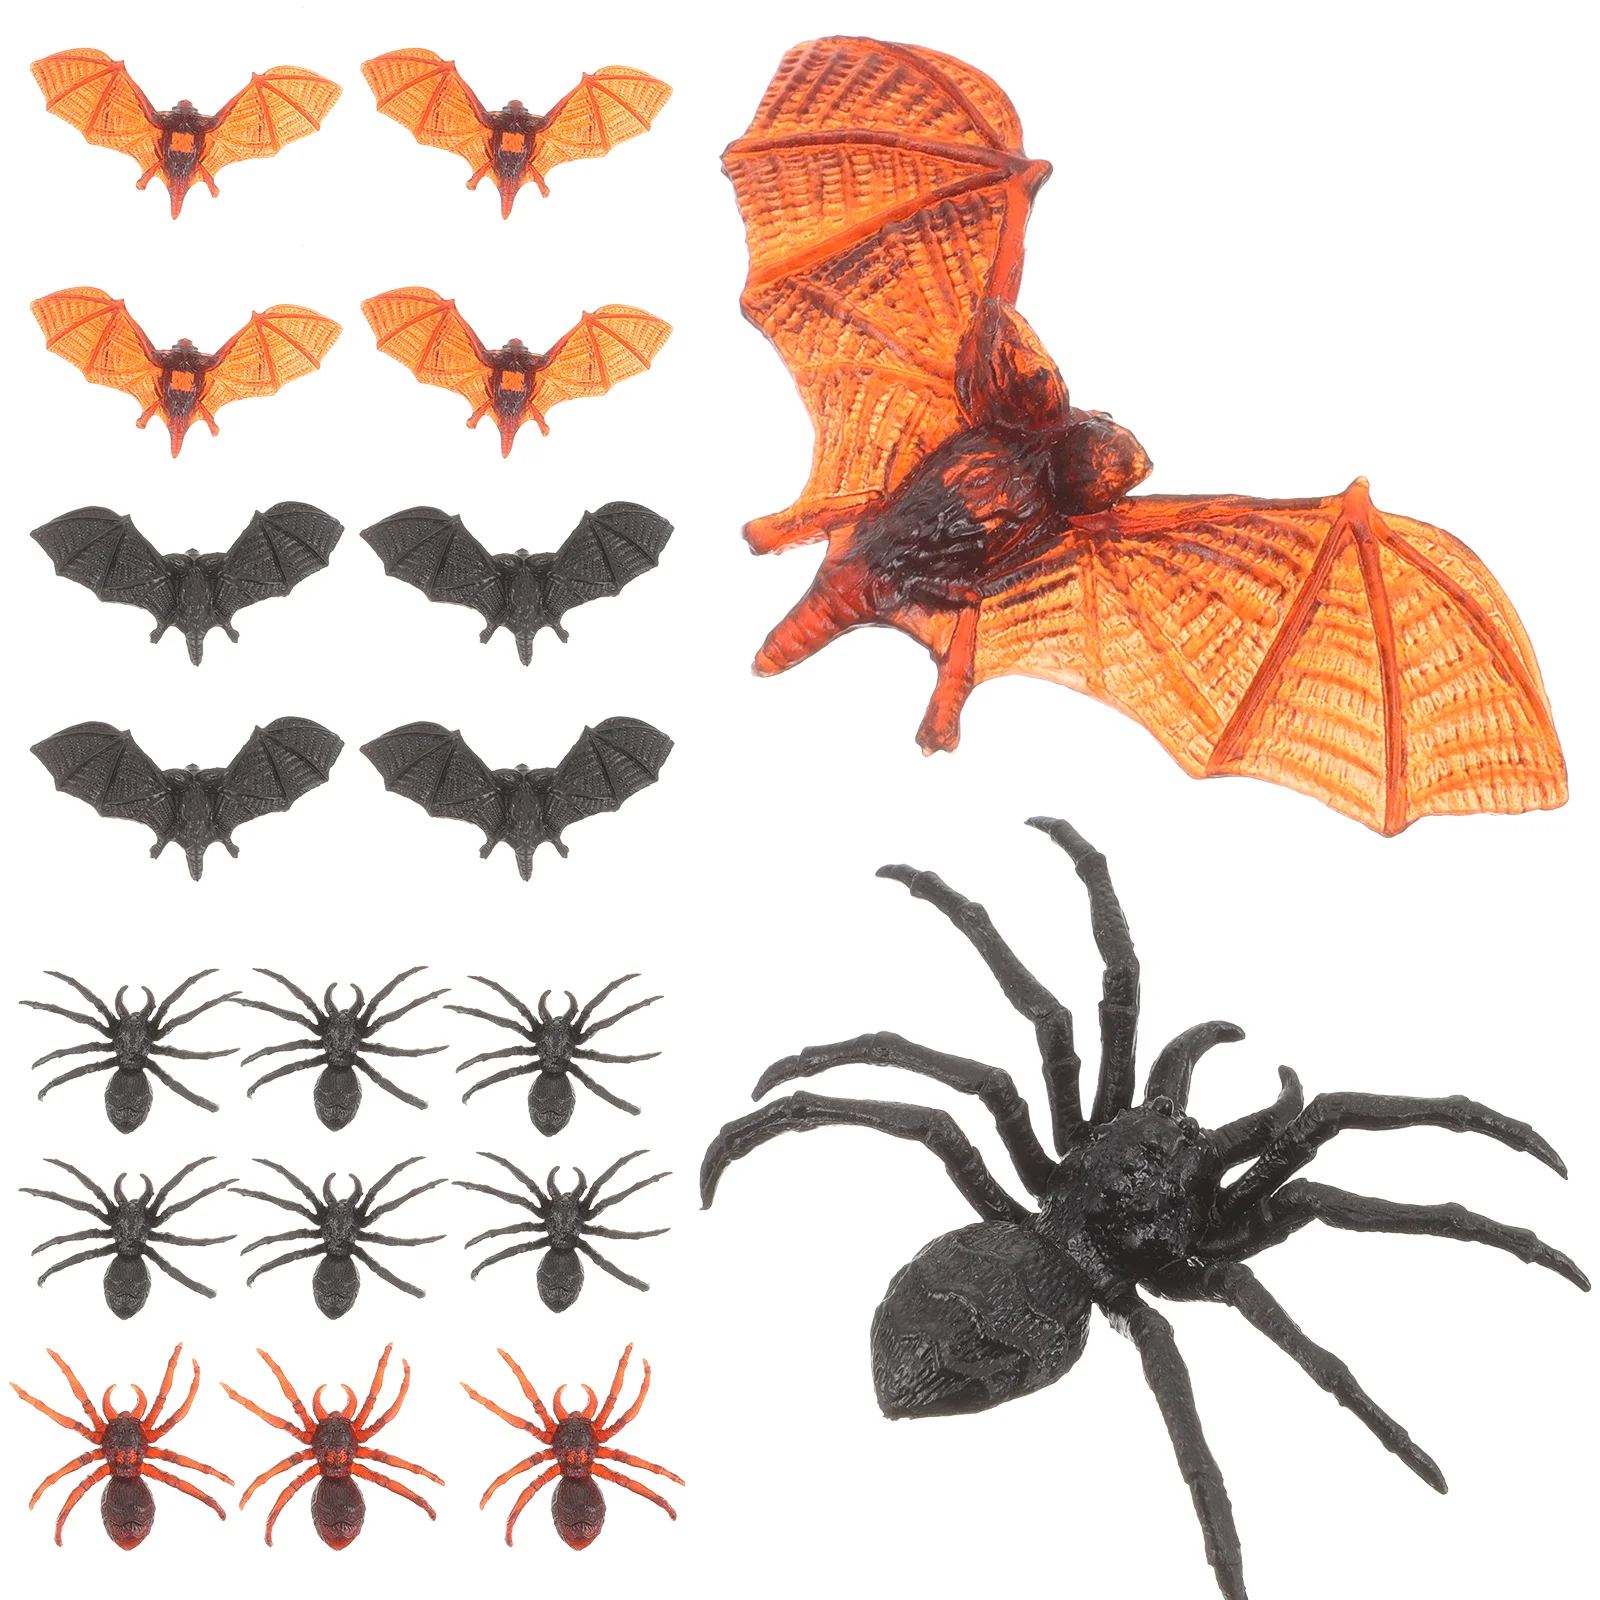 

40 Pcs Simulation Spider Bat Scary Spiders Artificial Bats Toys Halloween Prop Prank Ornaments Desktop Haunted House